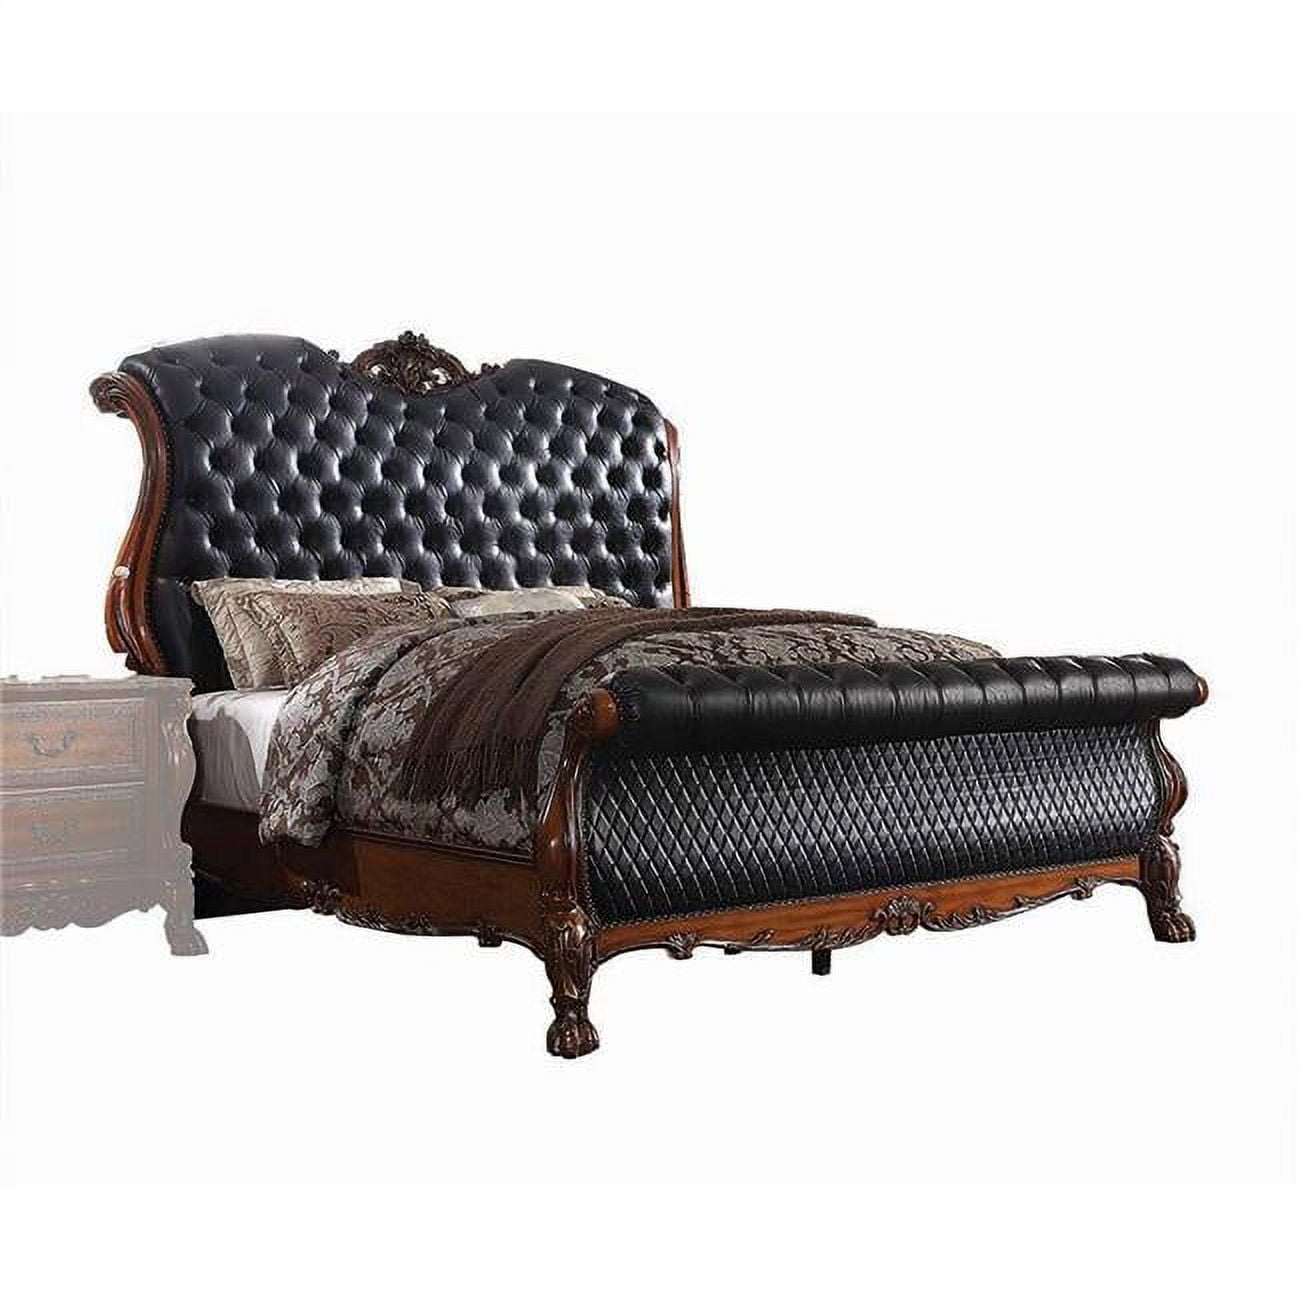 Picture of Acme Furniture 28227EK 76 x 88 x 104 in. Dresden Eastern Bed, Cherry Oak - King Size